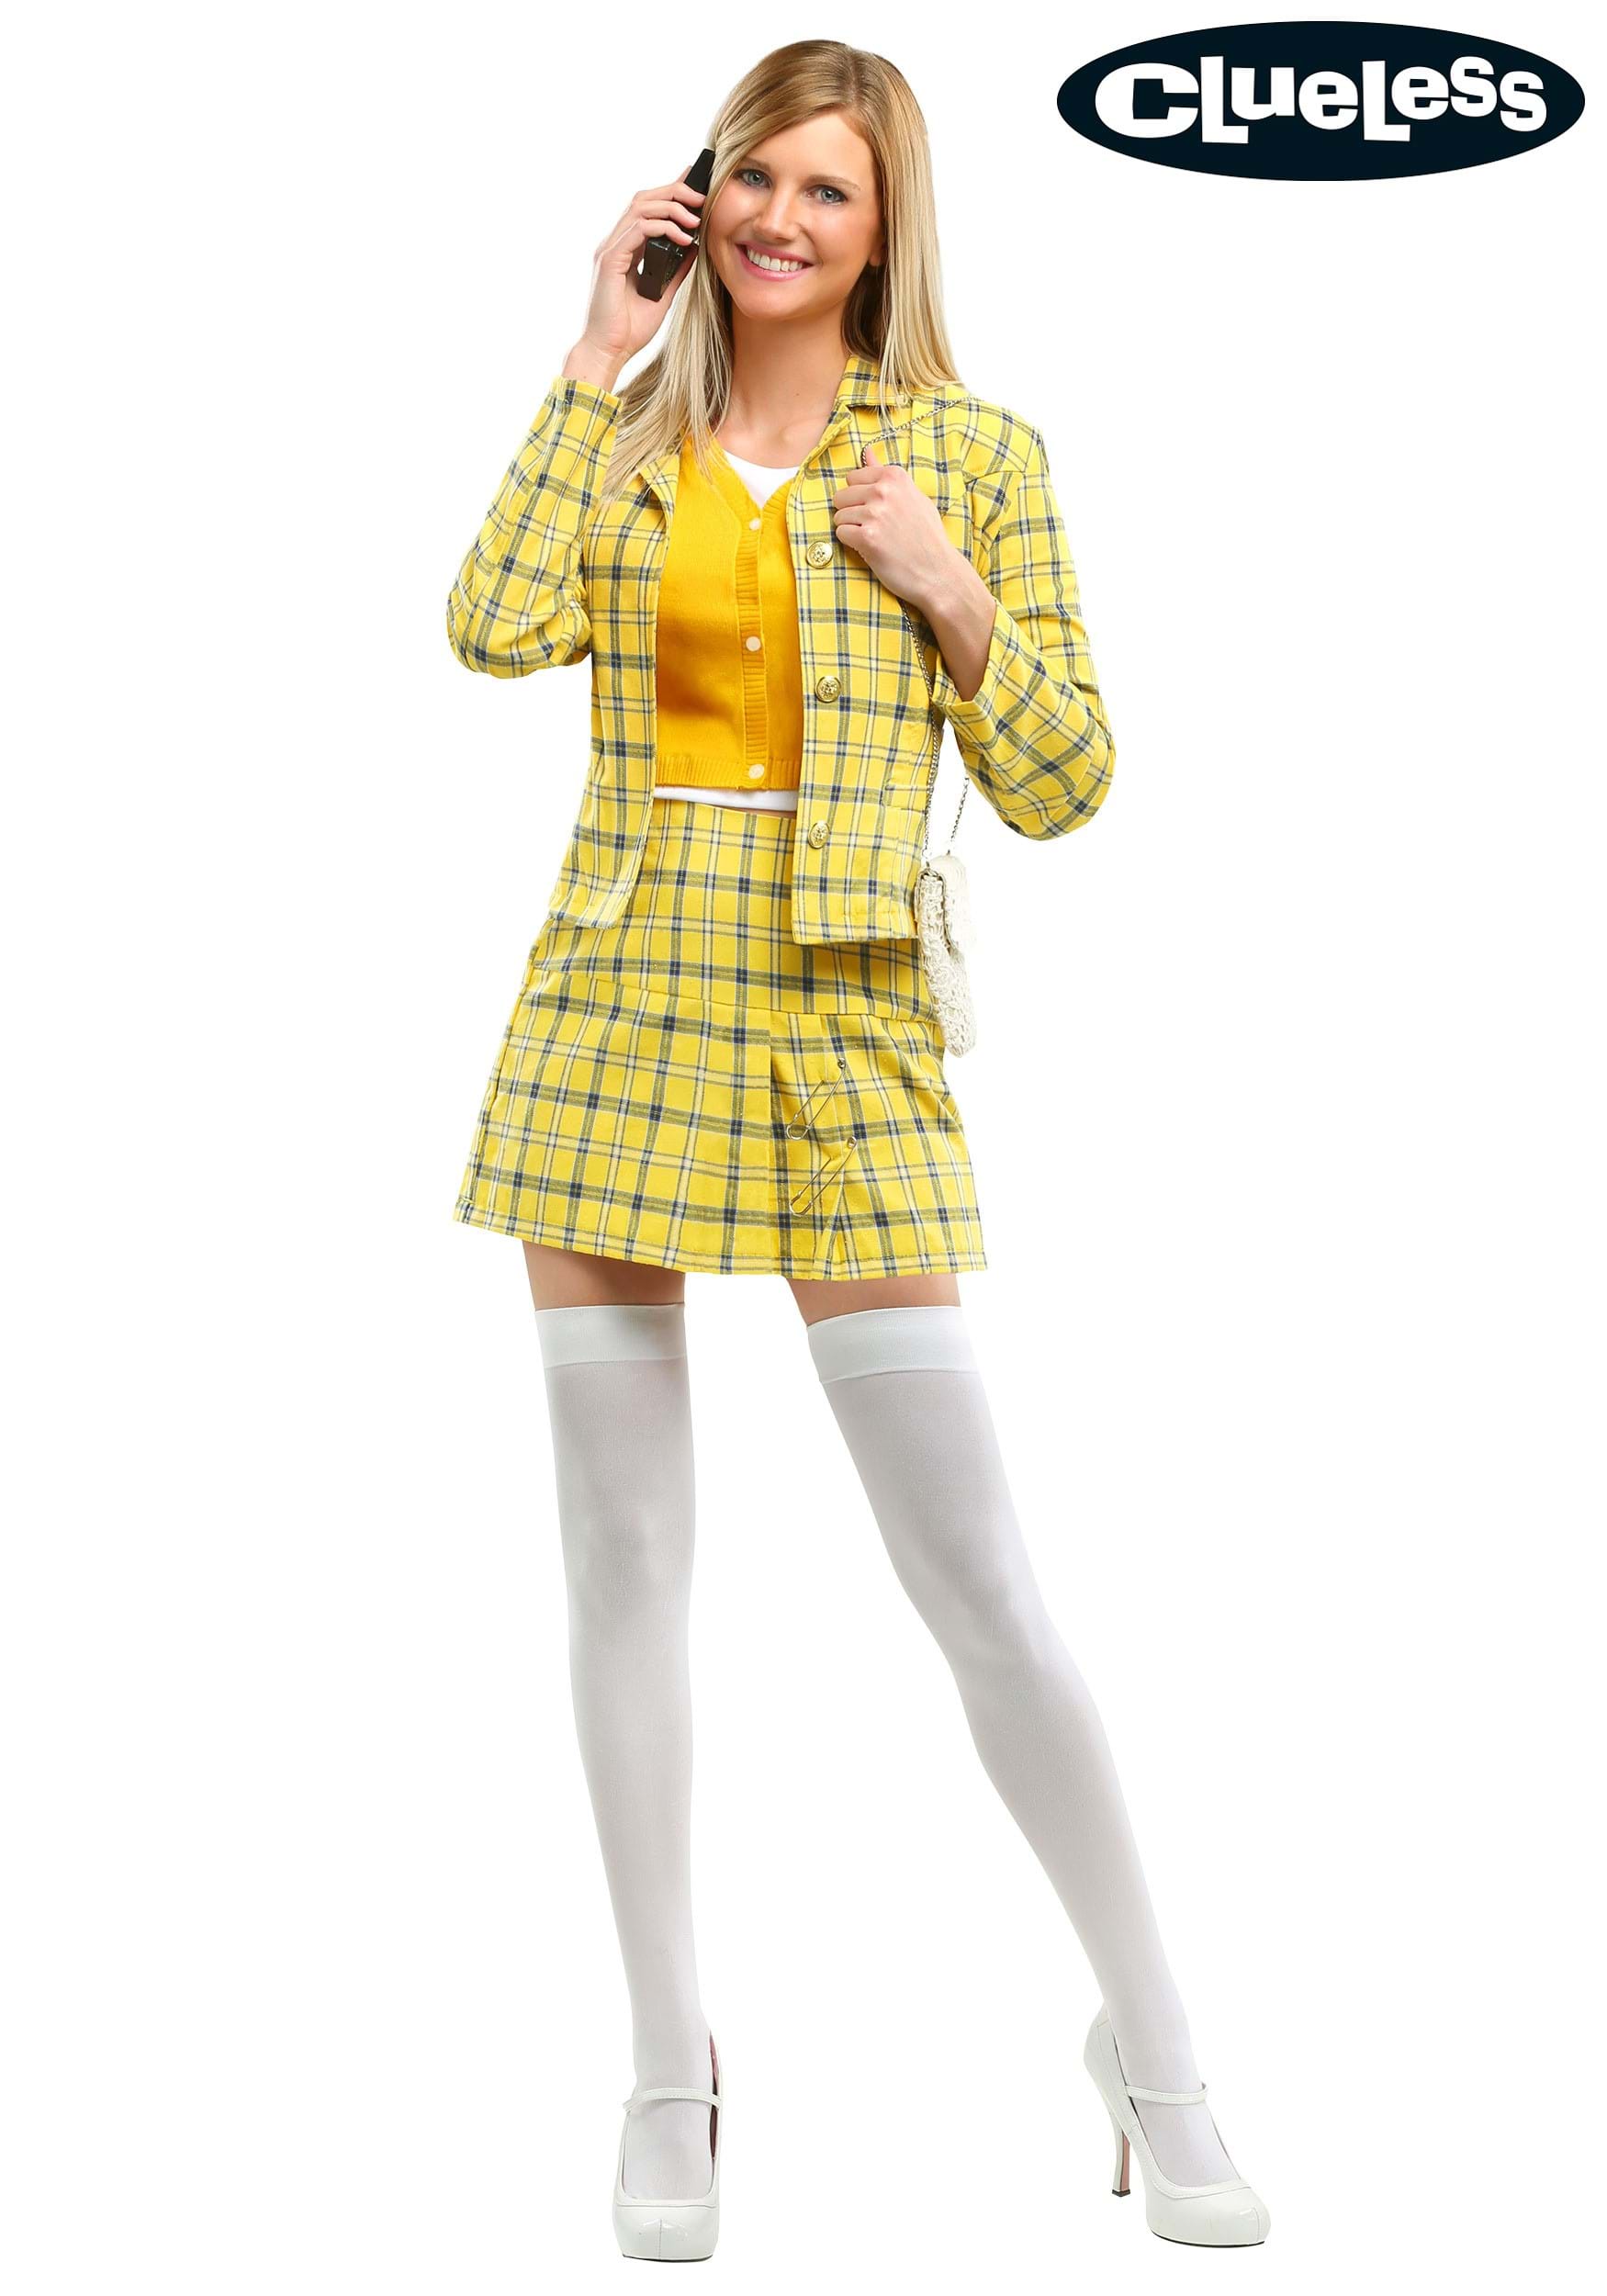 Bumble Bee Black Yellow Stripe Pattern Leggings Halloween Costume Girls  Women Adult and Plus Sizes Theater Dress up School Mascot 